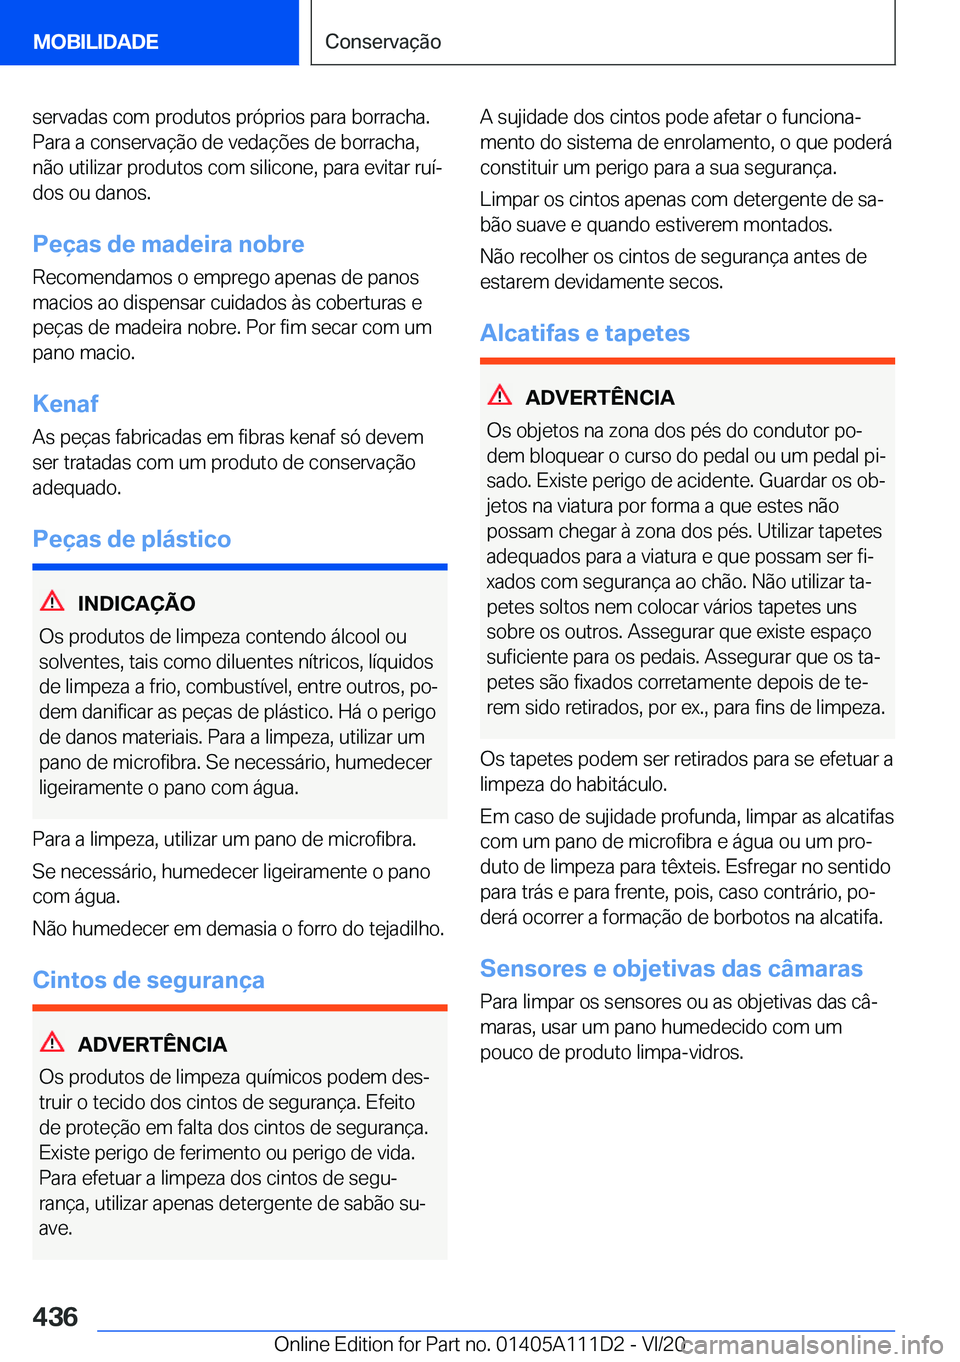 BMW 3 SERIES SEDAN PLUG-IN HYBRID 2021  Manual do condutor (in Portuguese) �s�e�r�v�a�d�a�s��c�o�m��p�r�o�d�u�t�o�s��p�r�ó�p�r�i�o�s��p�a�r�a��b�o�r�r�a�c�h�a�.�P�a�r�a��a��c�o�n�s�e�r�v�a�